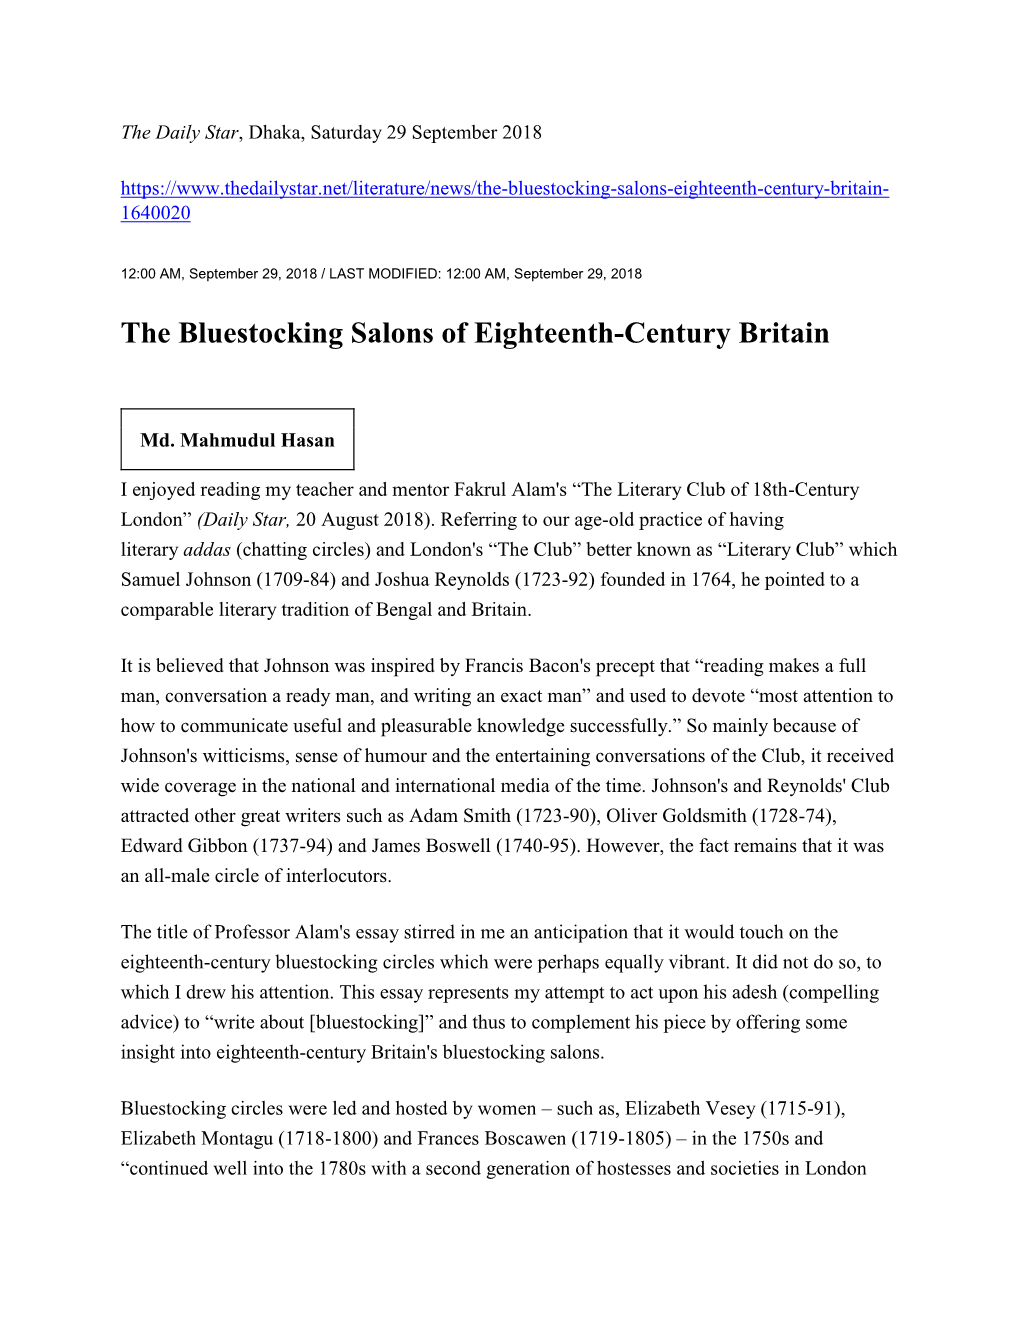 The Bluestocking Salons of Eighteenth-Century Britain